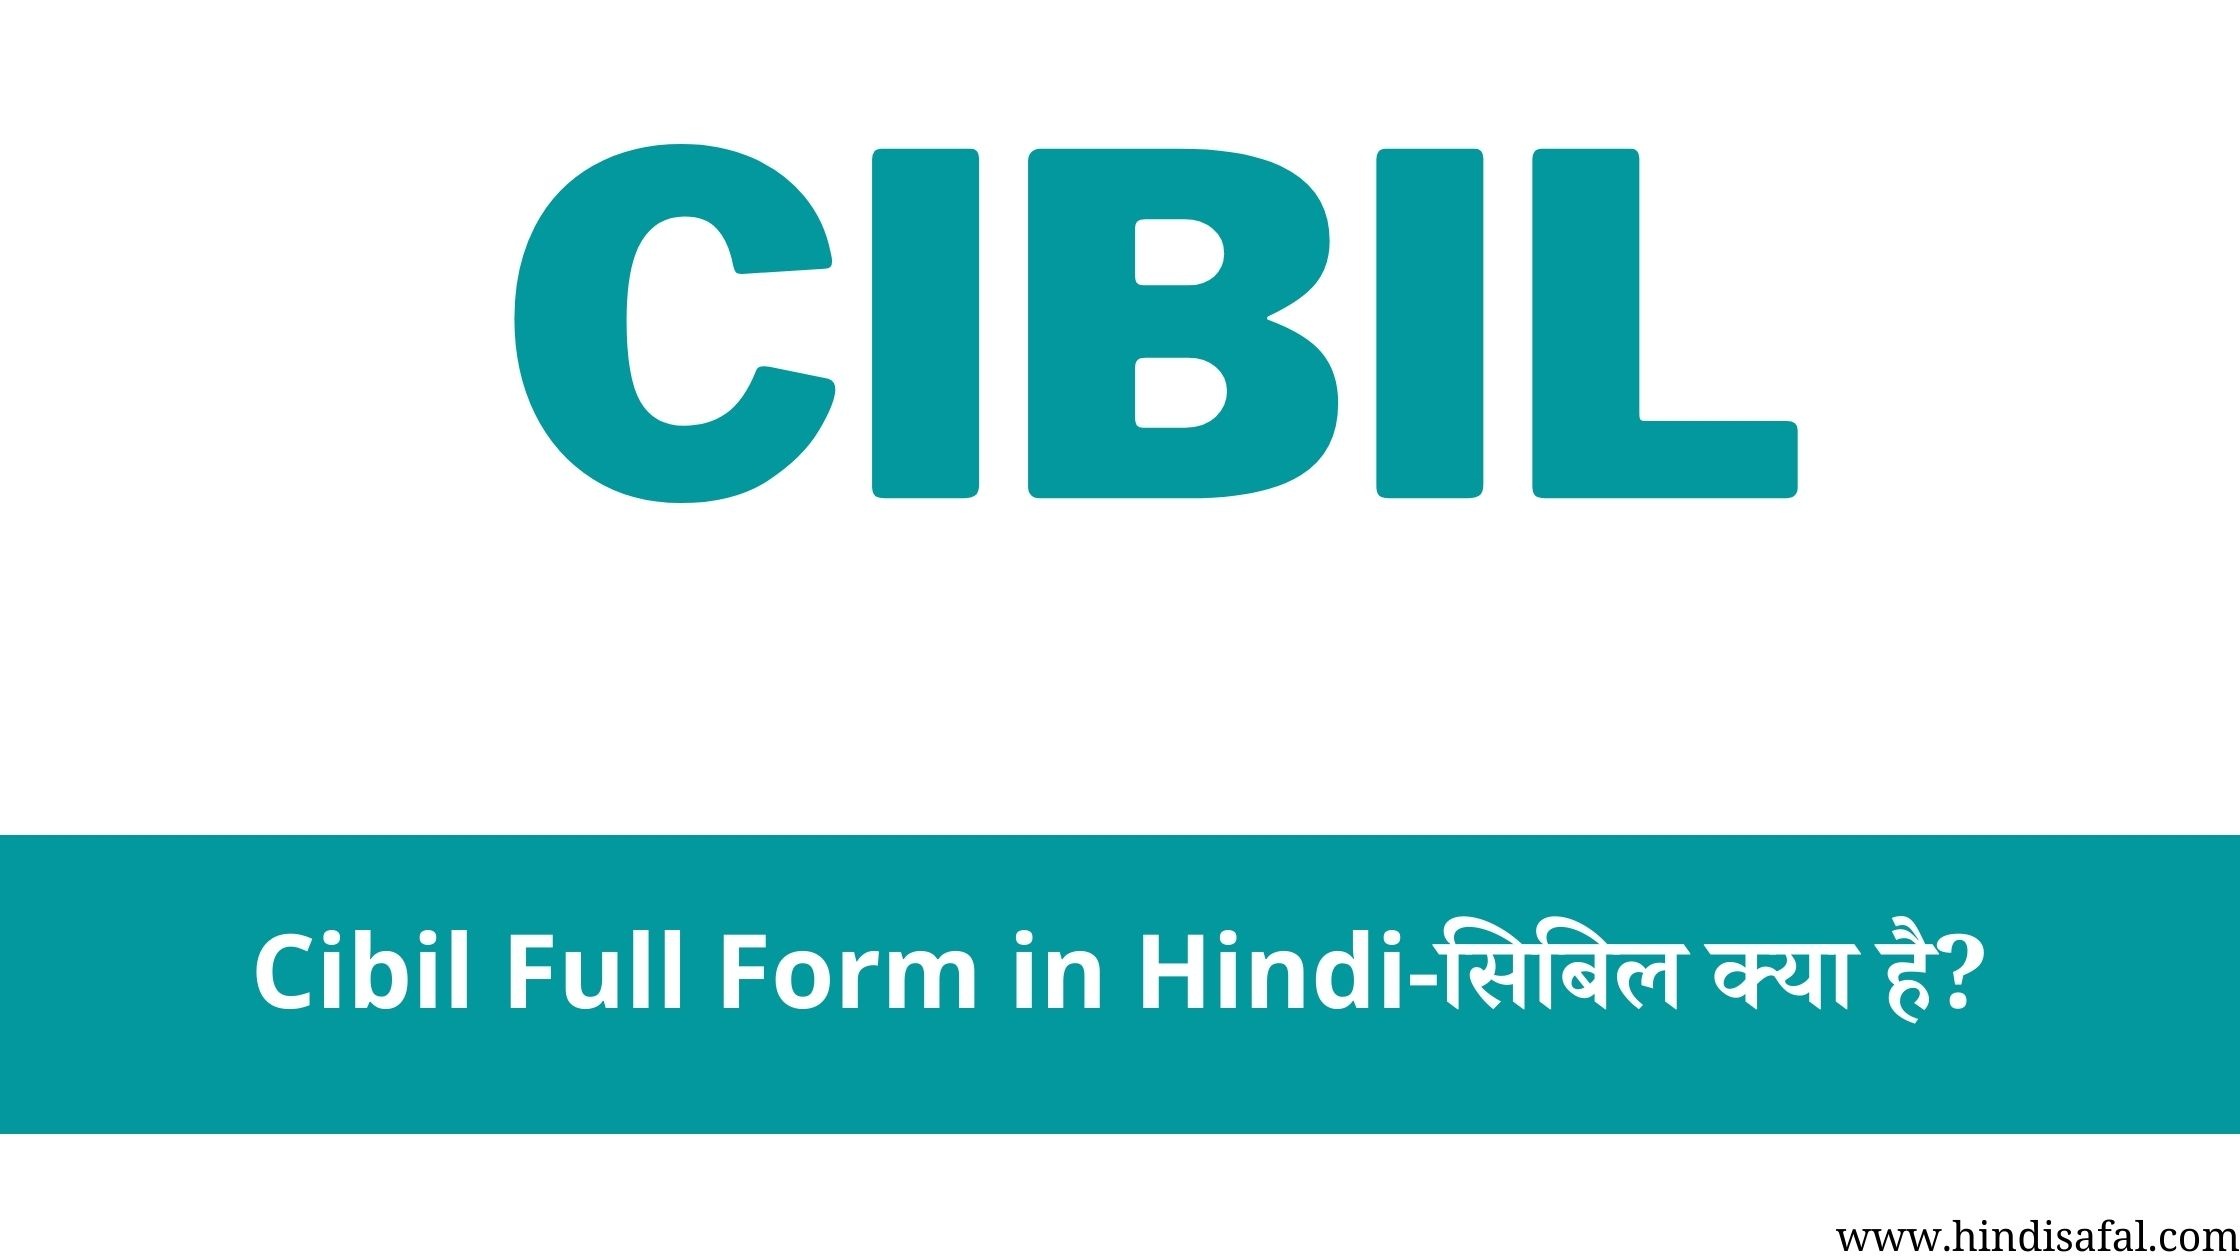 Cibil Full Form in Hindi